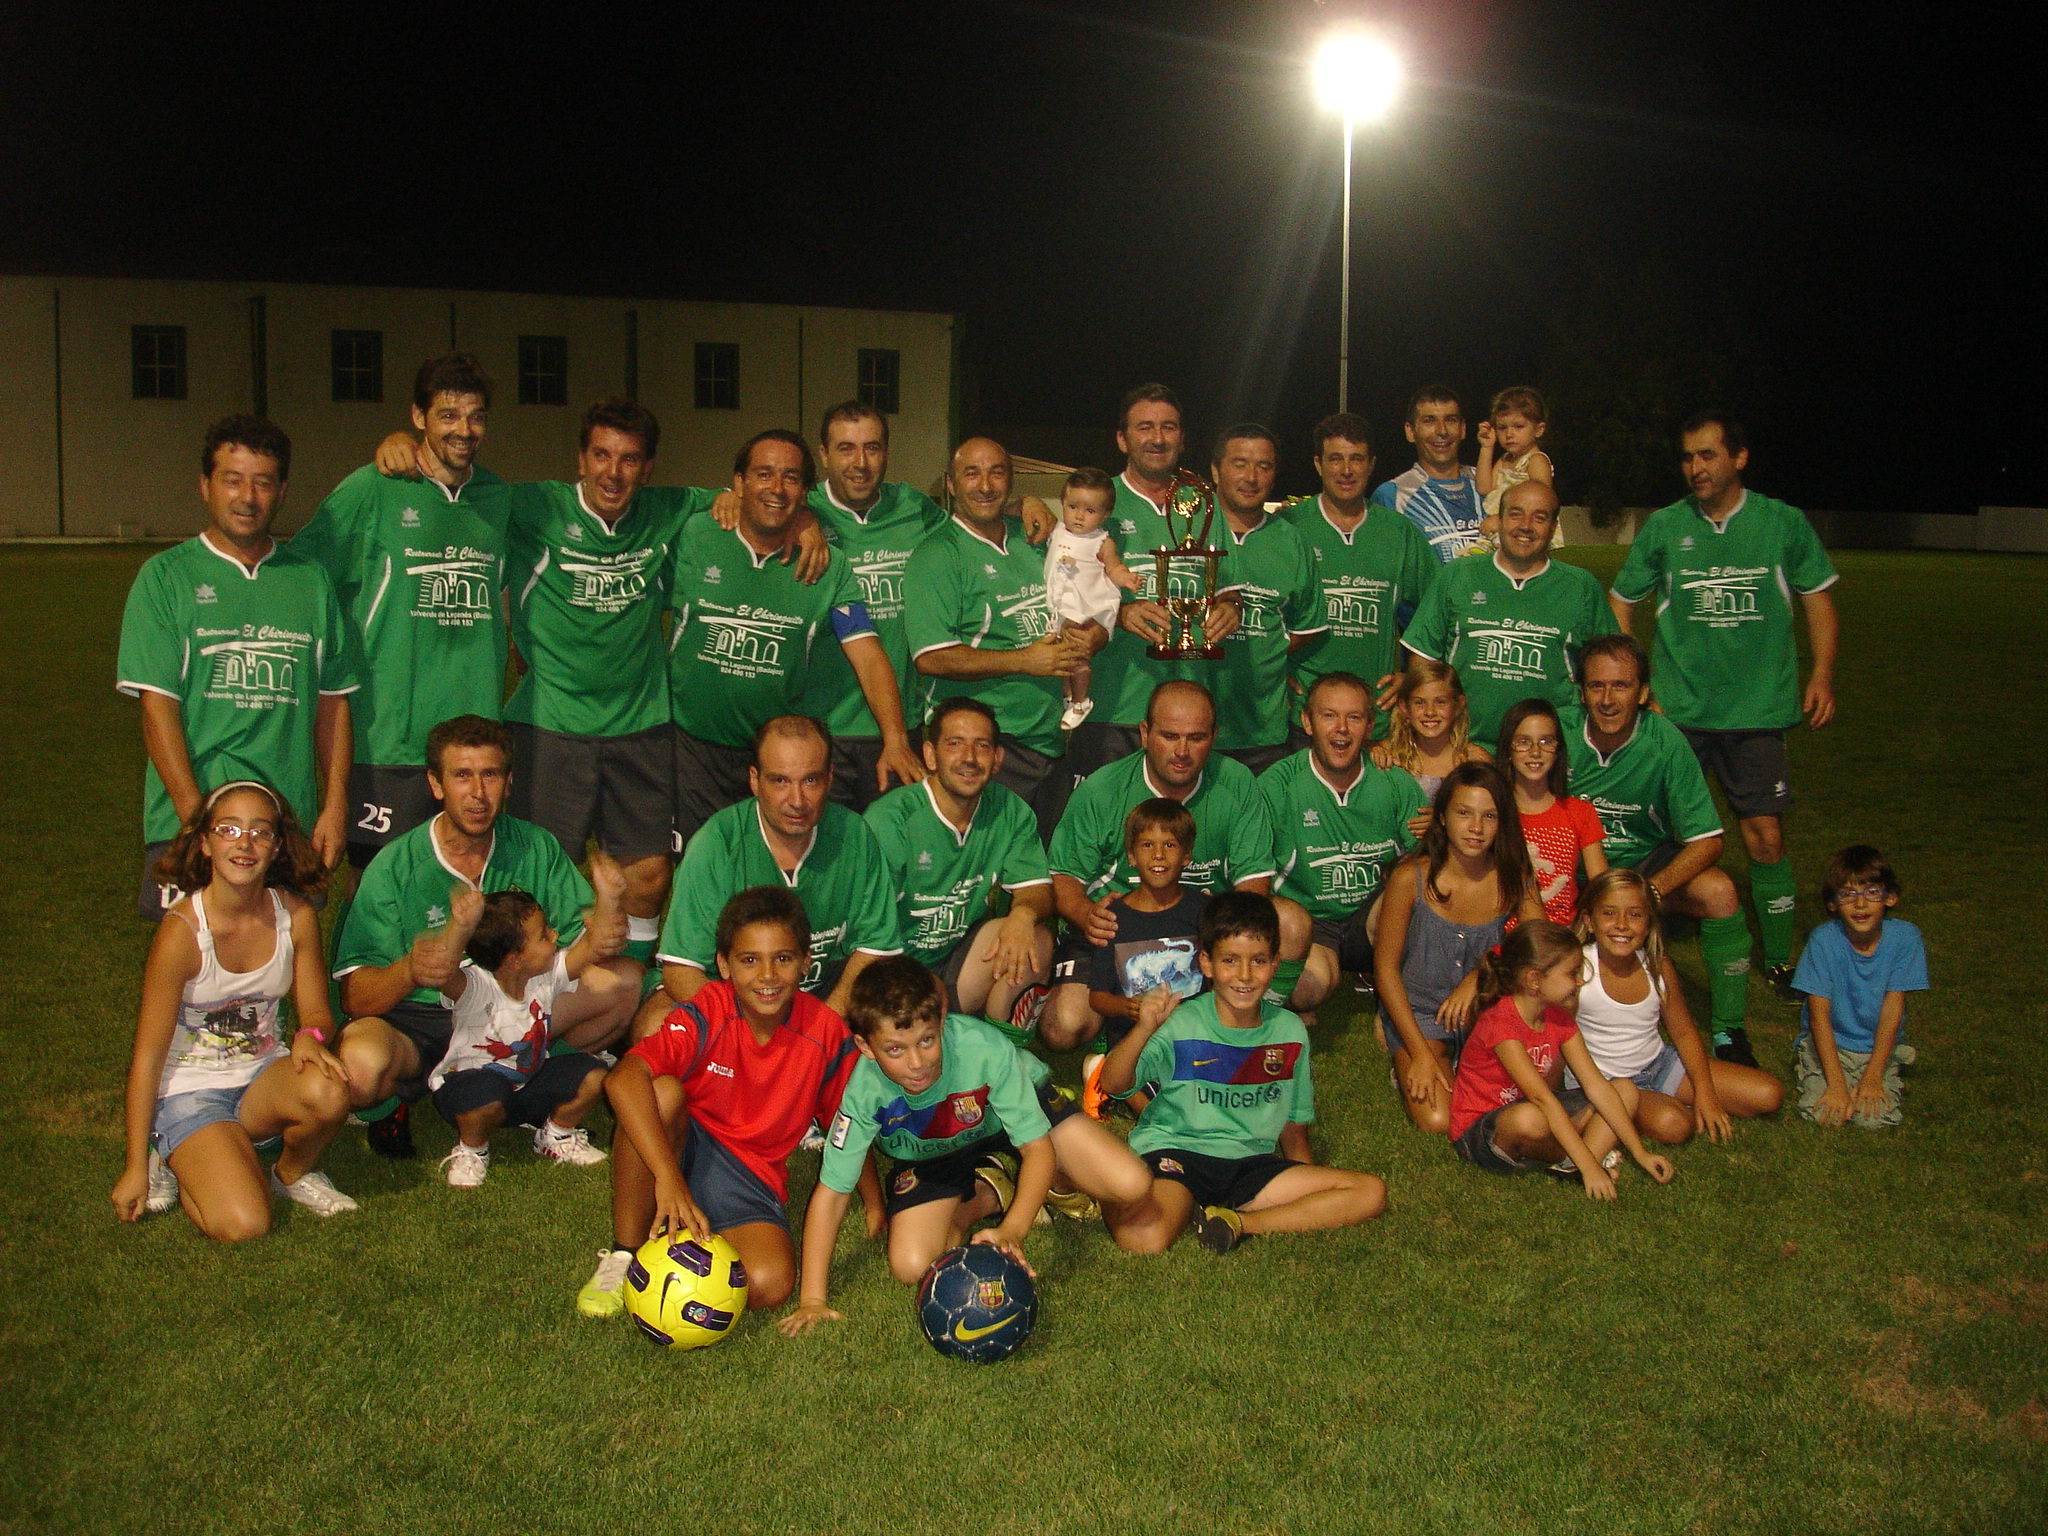 VII "Trofeo Piedra Aguda" de Fútbol Veteranos